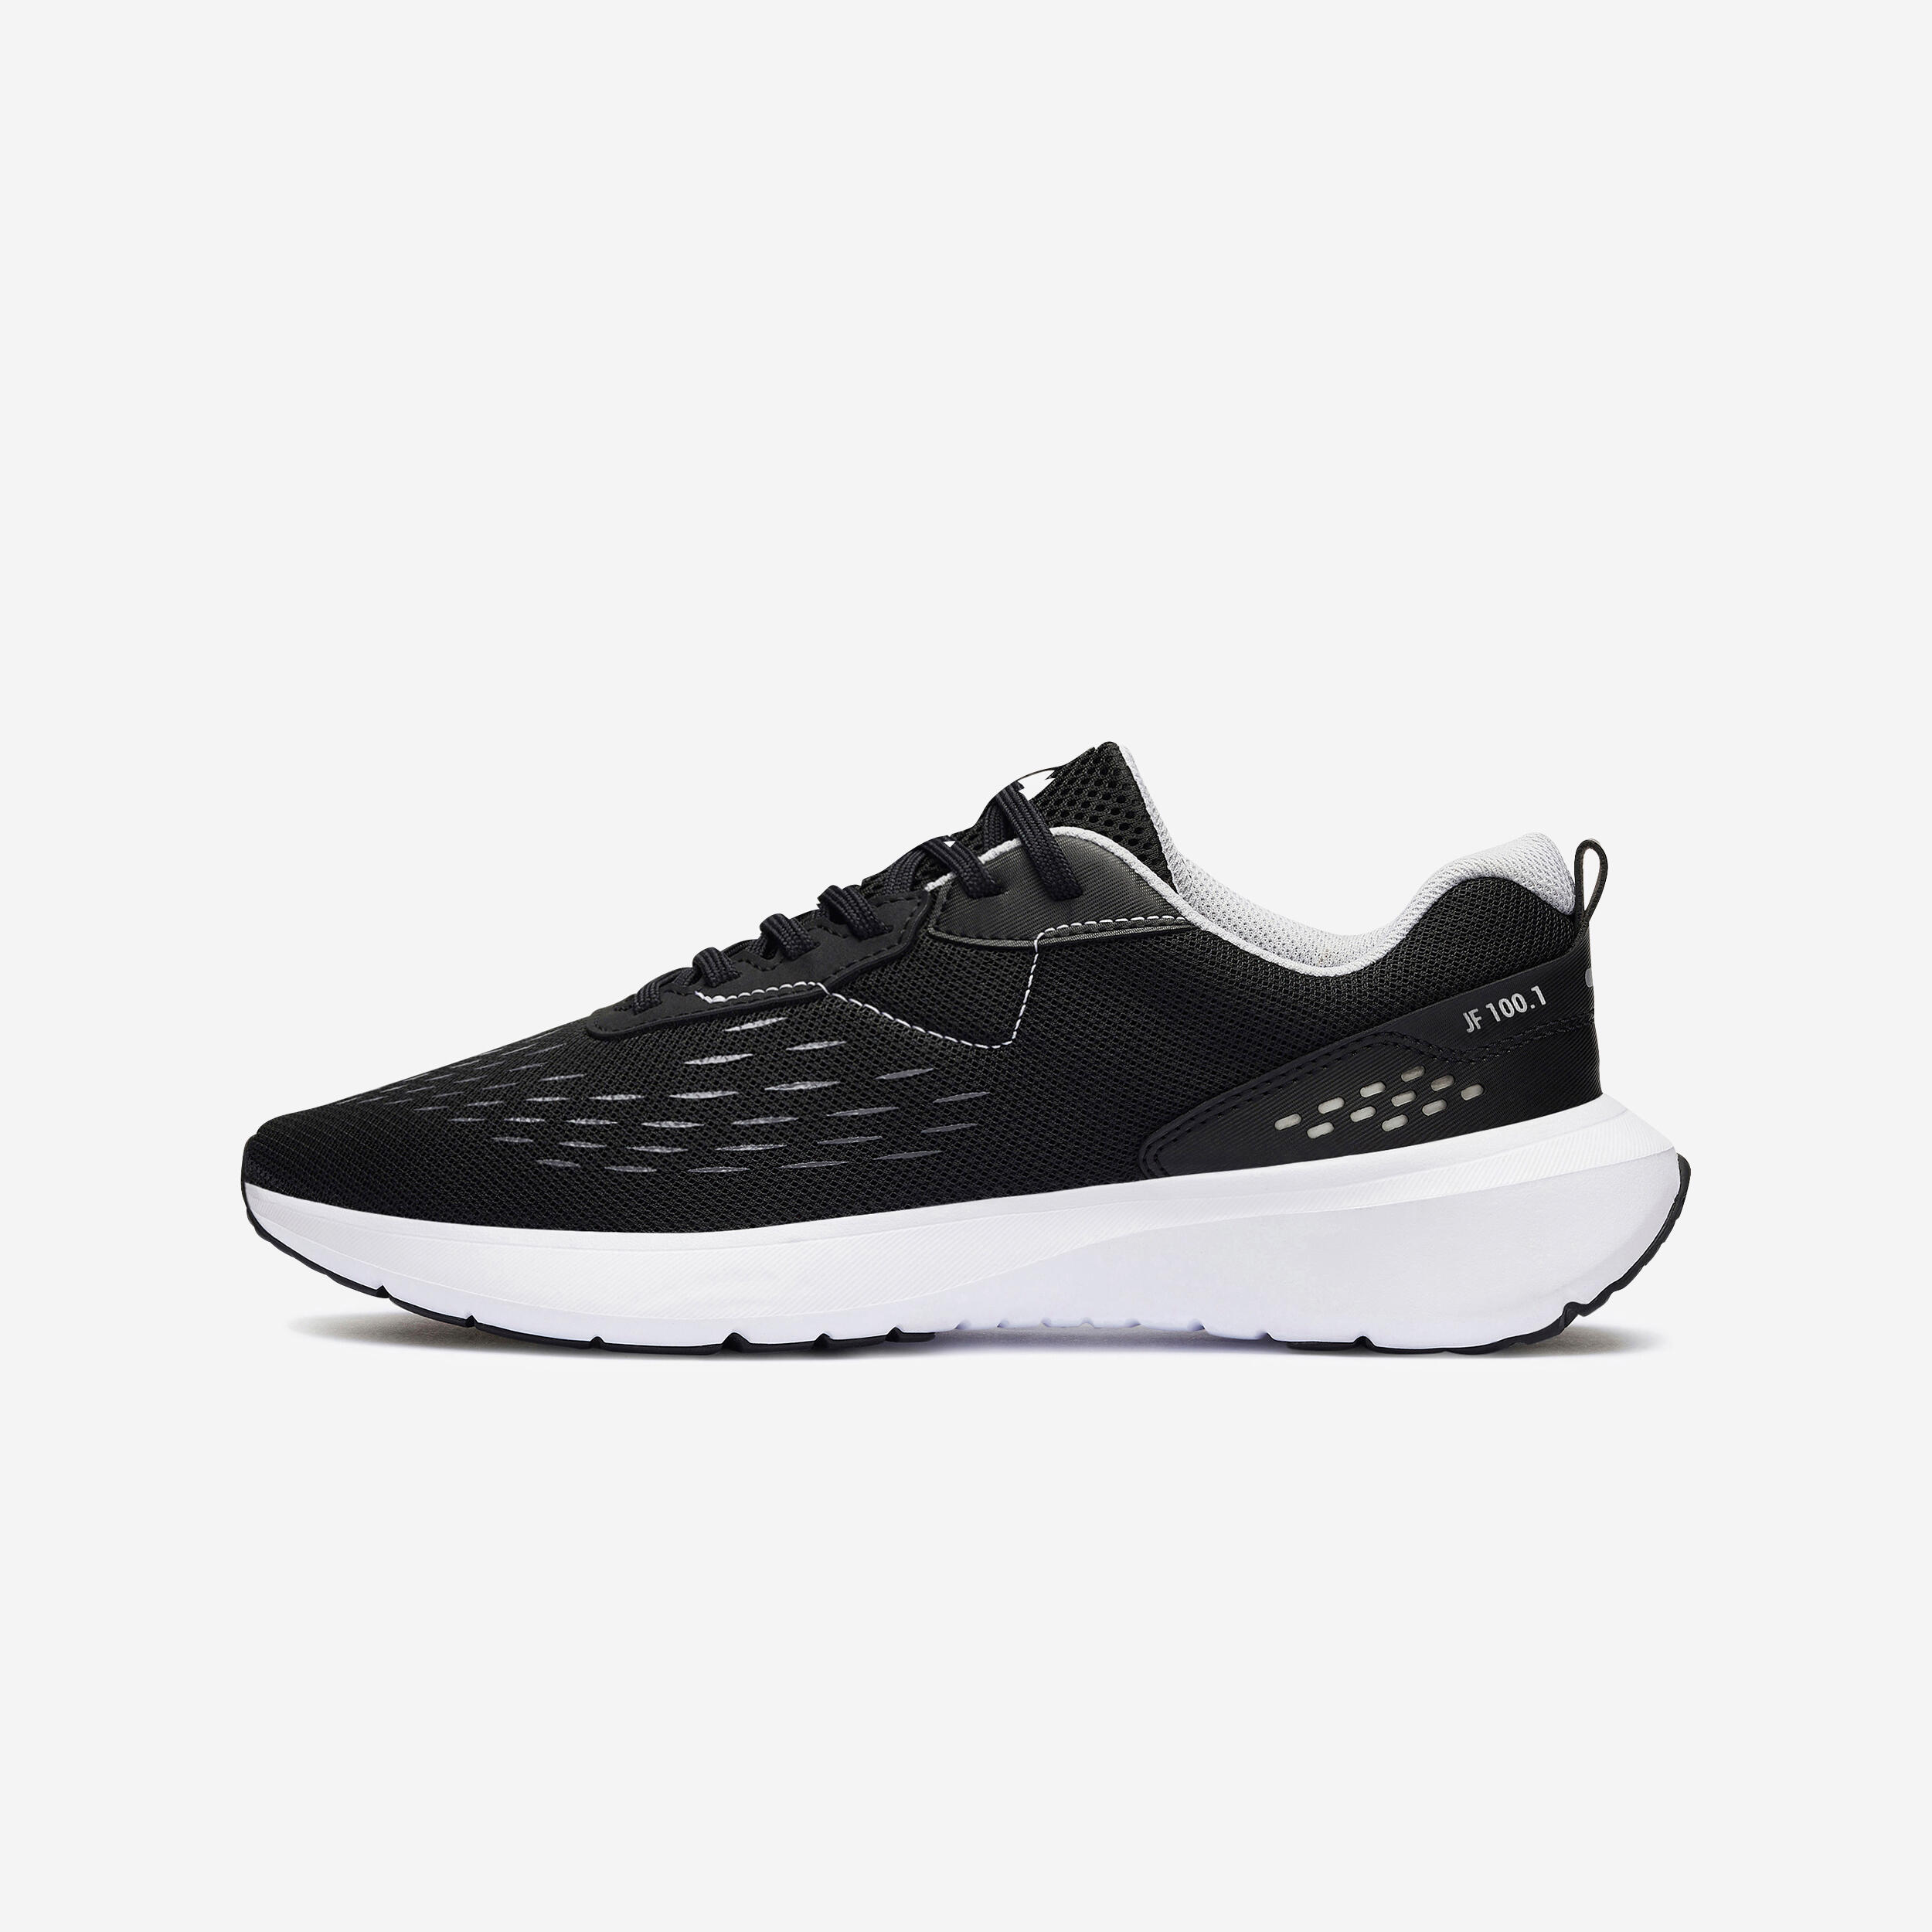 Image of Men's Running Shoes - Jogflow 100.1 Black